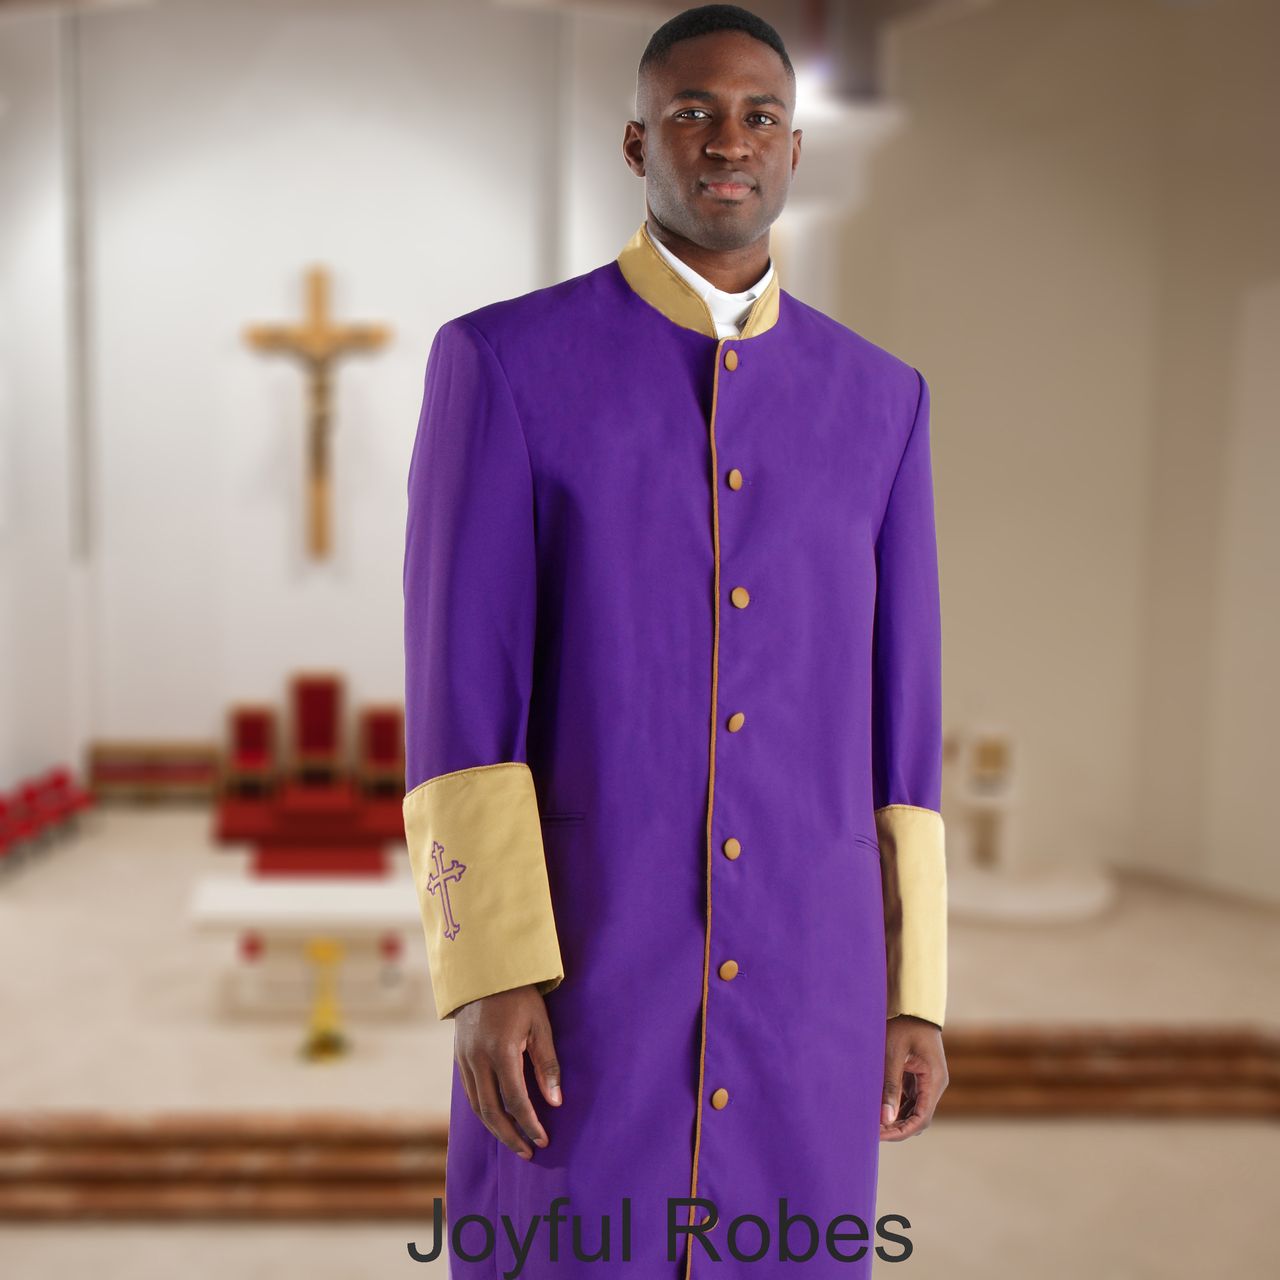 302 M. Men's Pastor/Clergy Robe - Purple/Gold Cuff